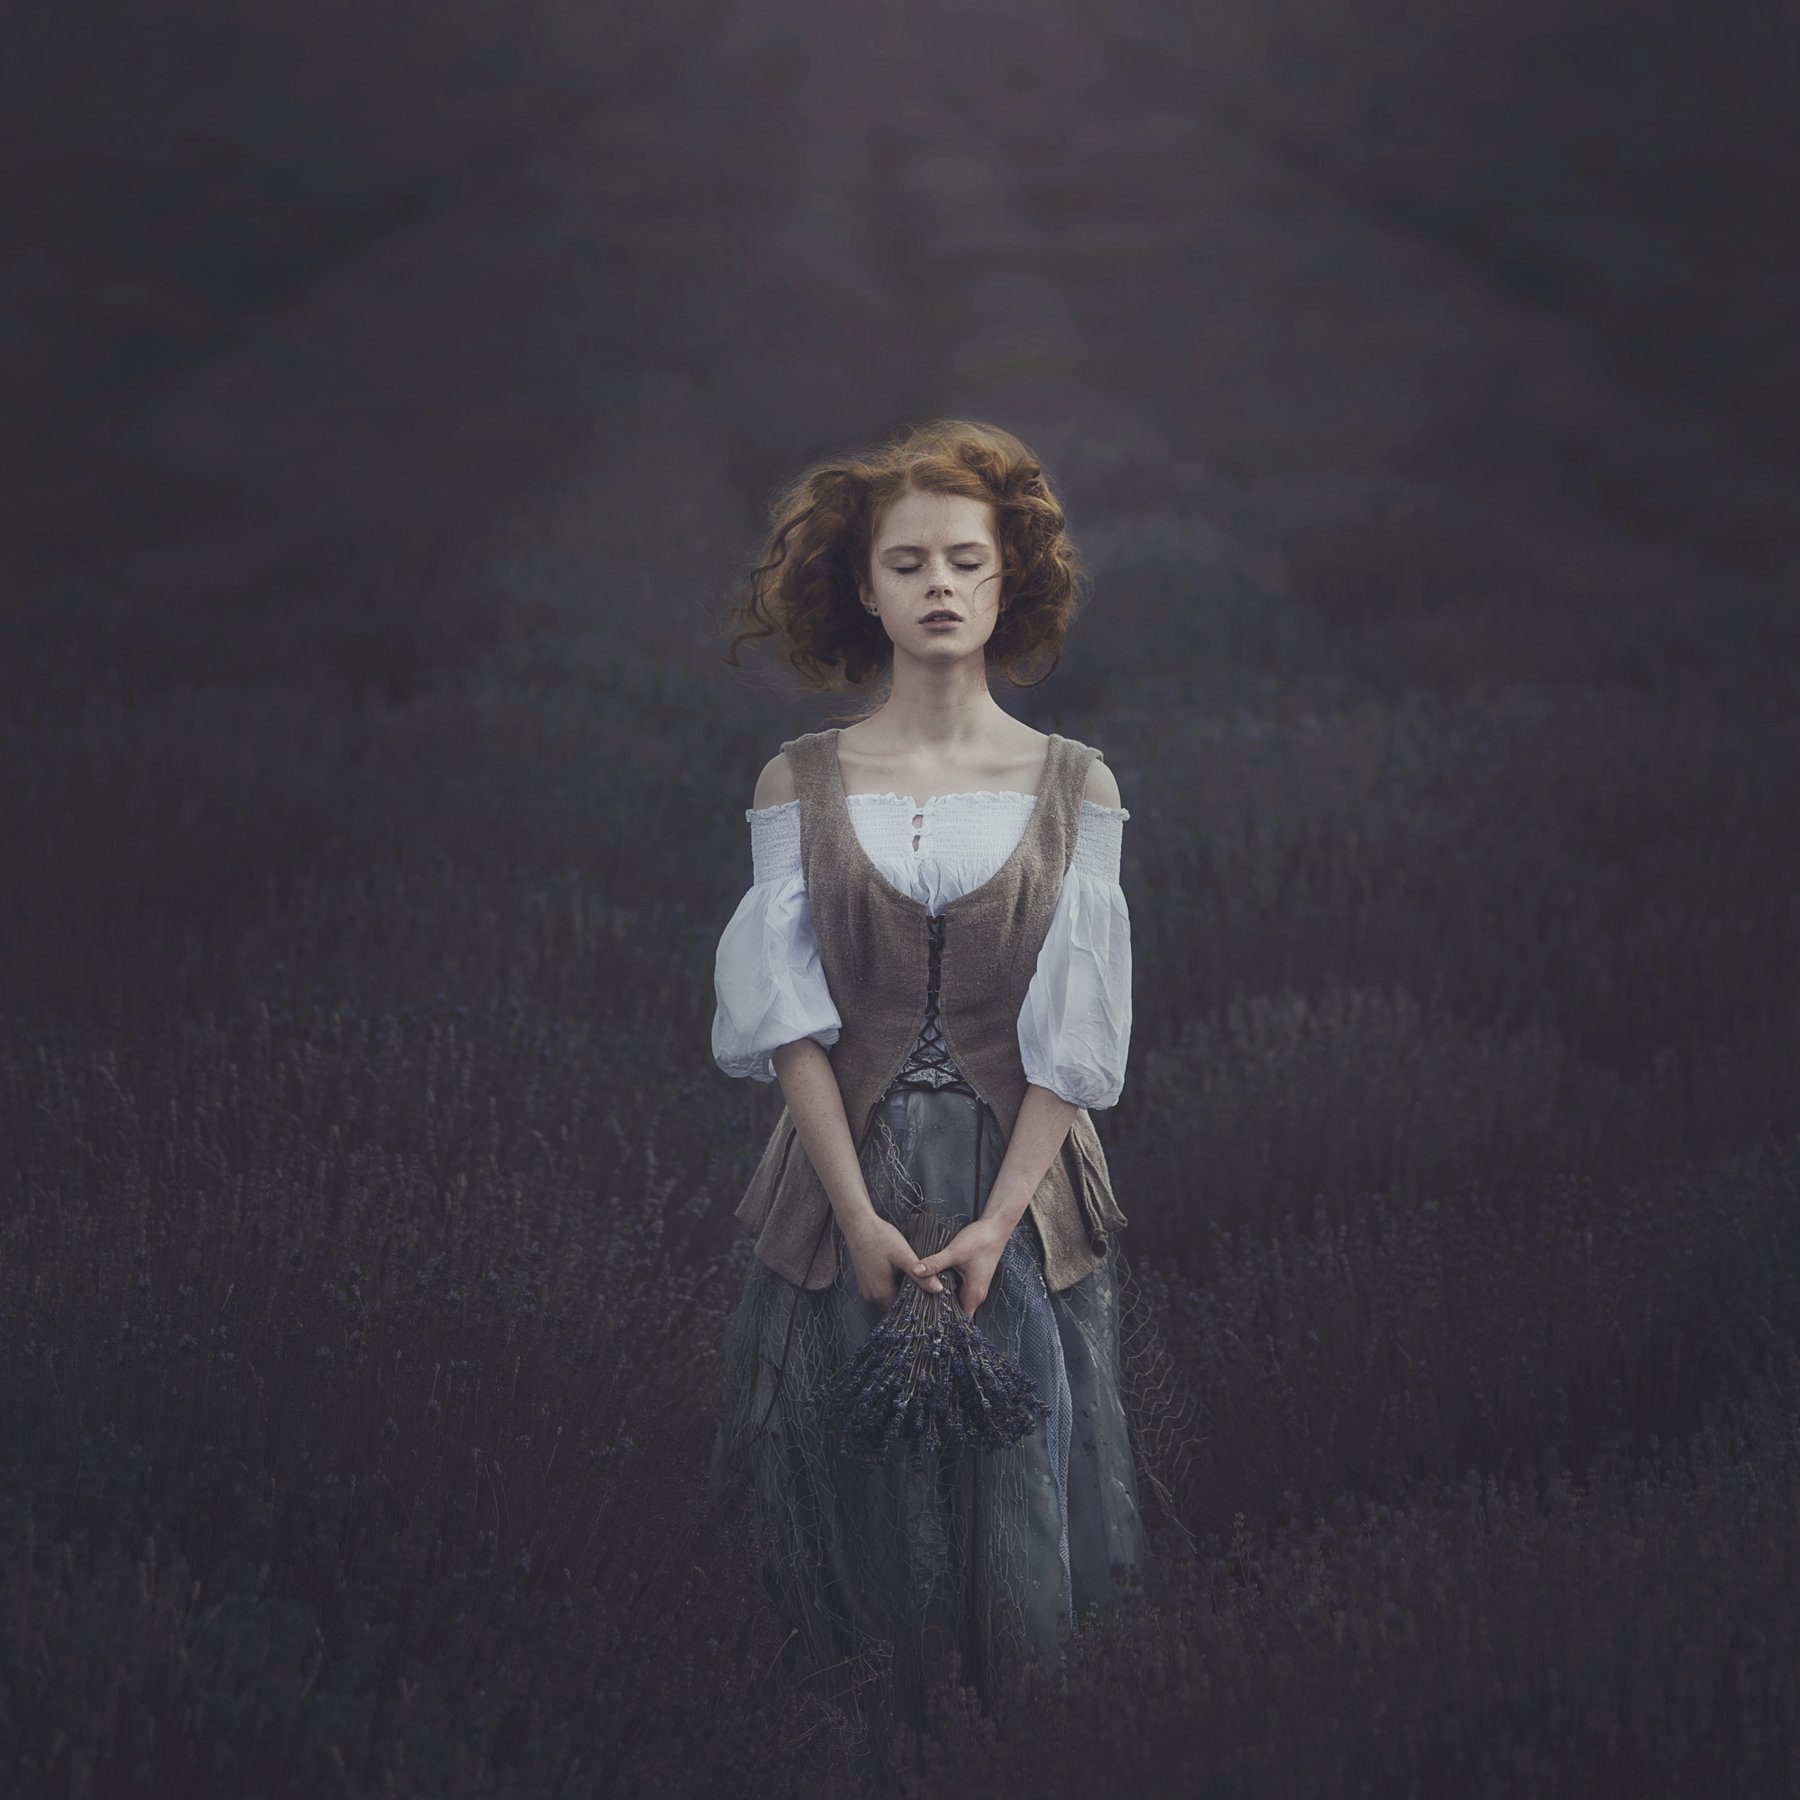 #lavender #storytelling #dreamcatcher #vintage #portrait , Izabella Sapuła